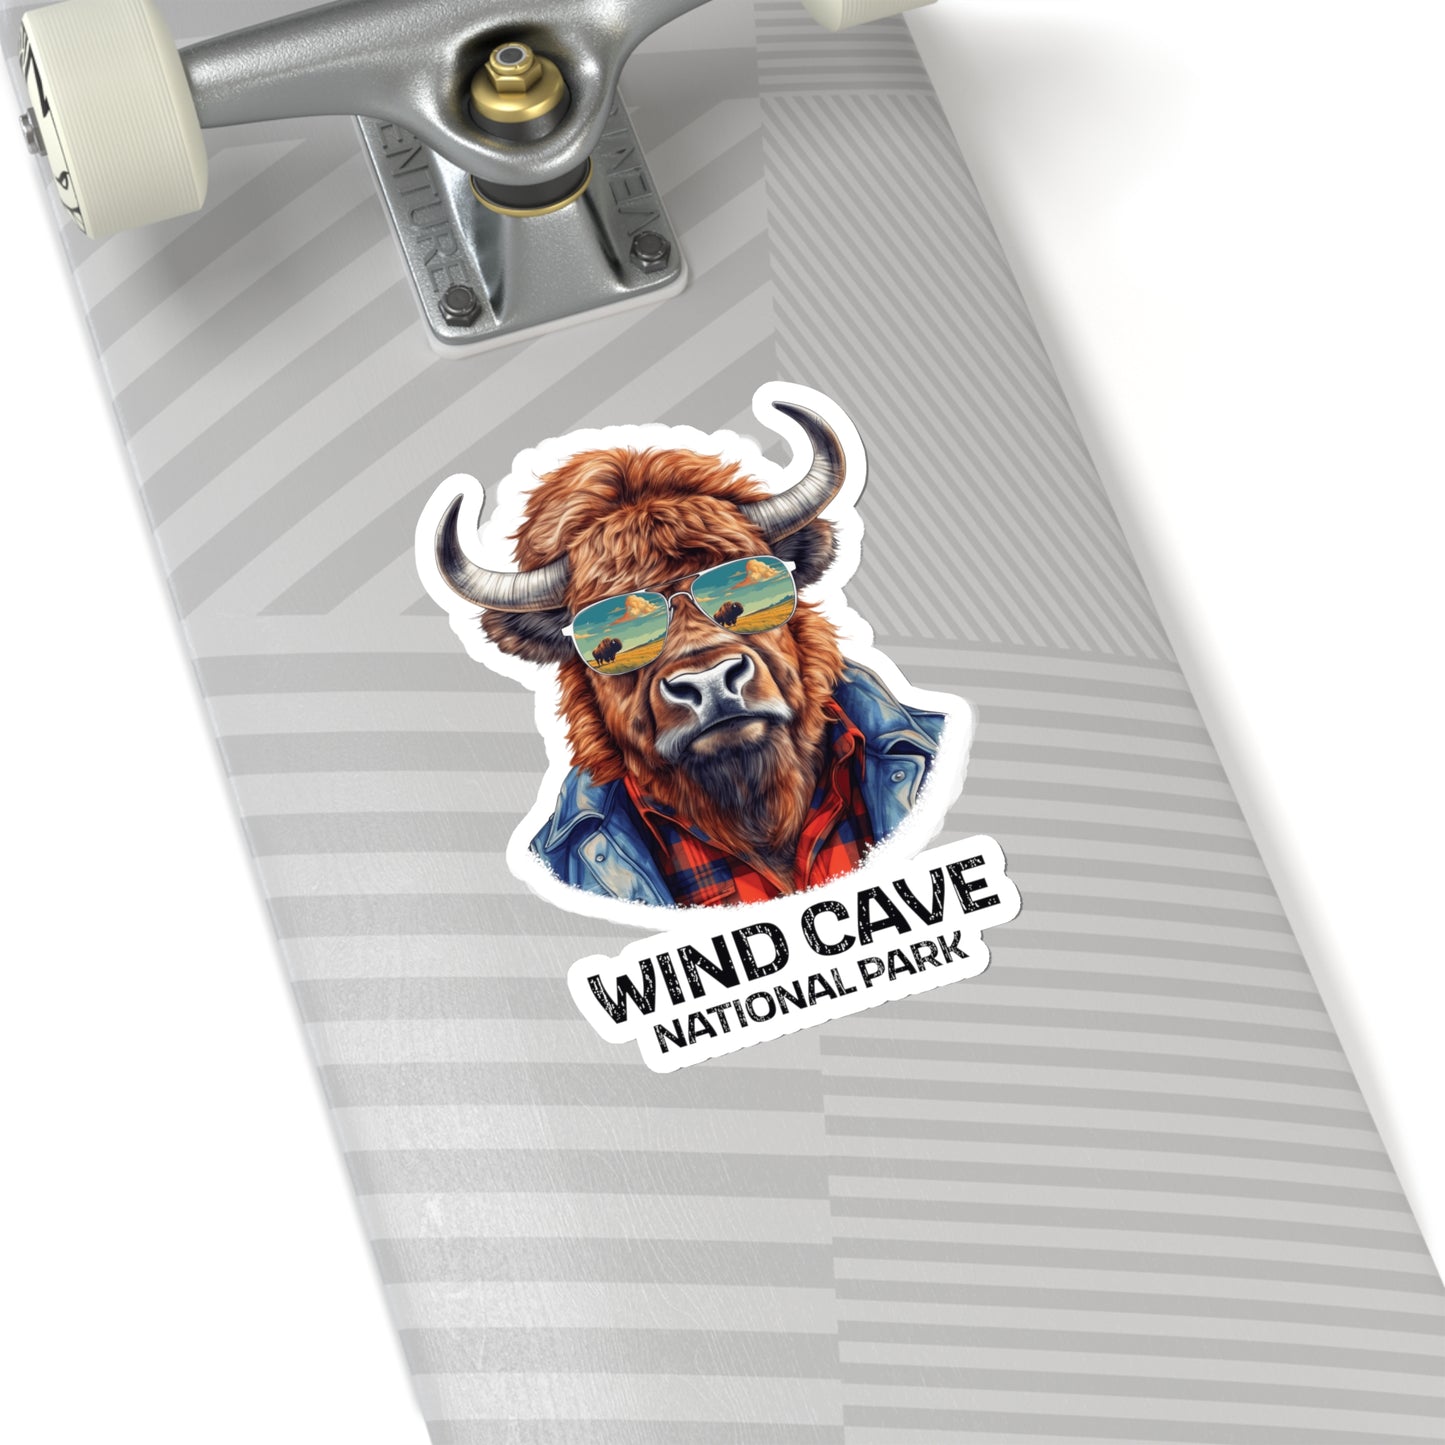 Wind Cave National Park Sticker - Moose